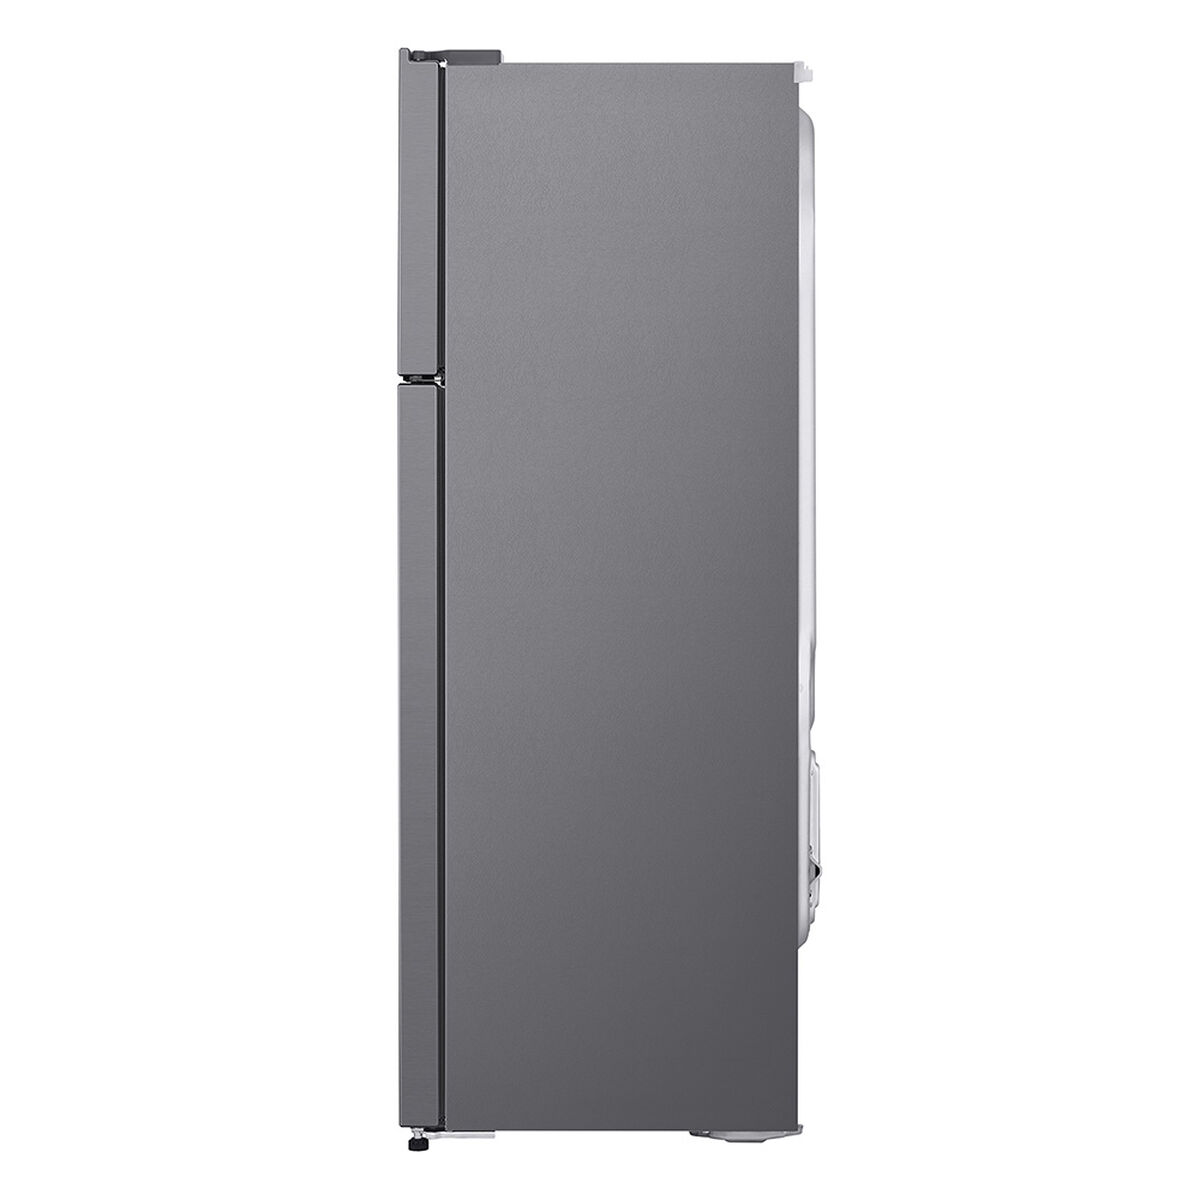 Refrigerador No Frost LG GT32WPPDC 312 lts.